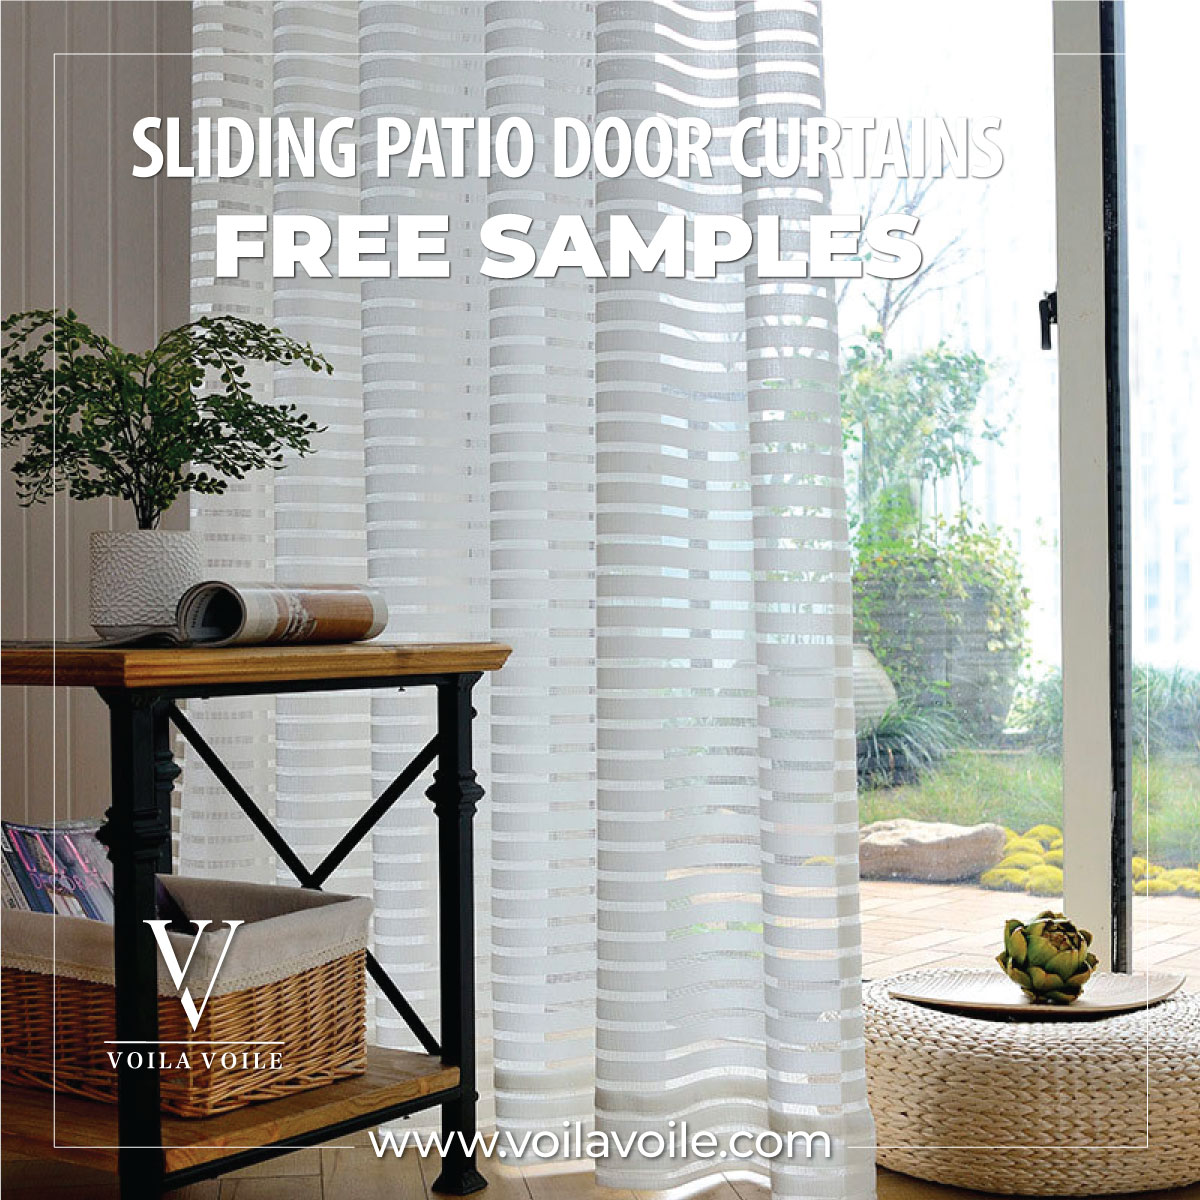 Stunning Patio Door Curtains | Free Samples